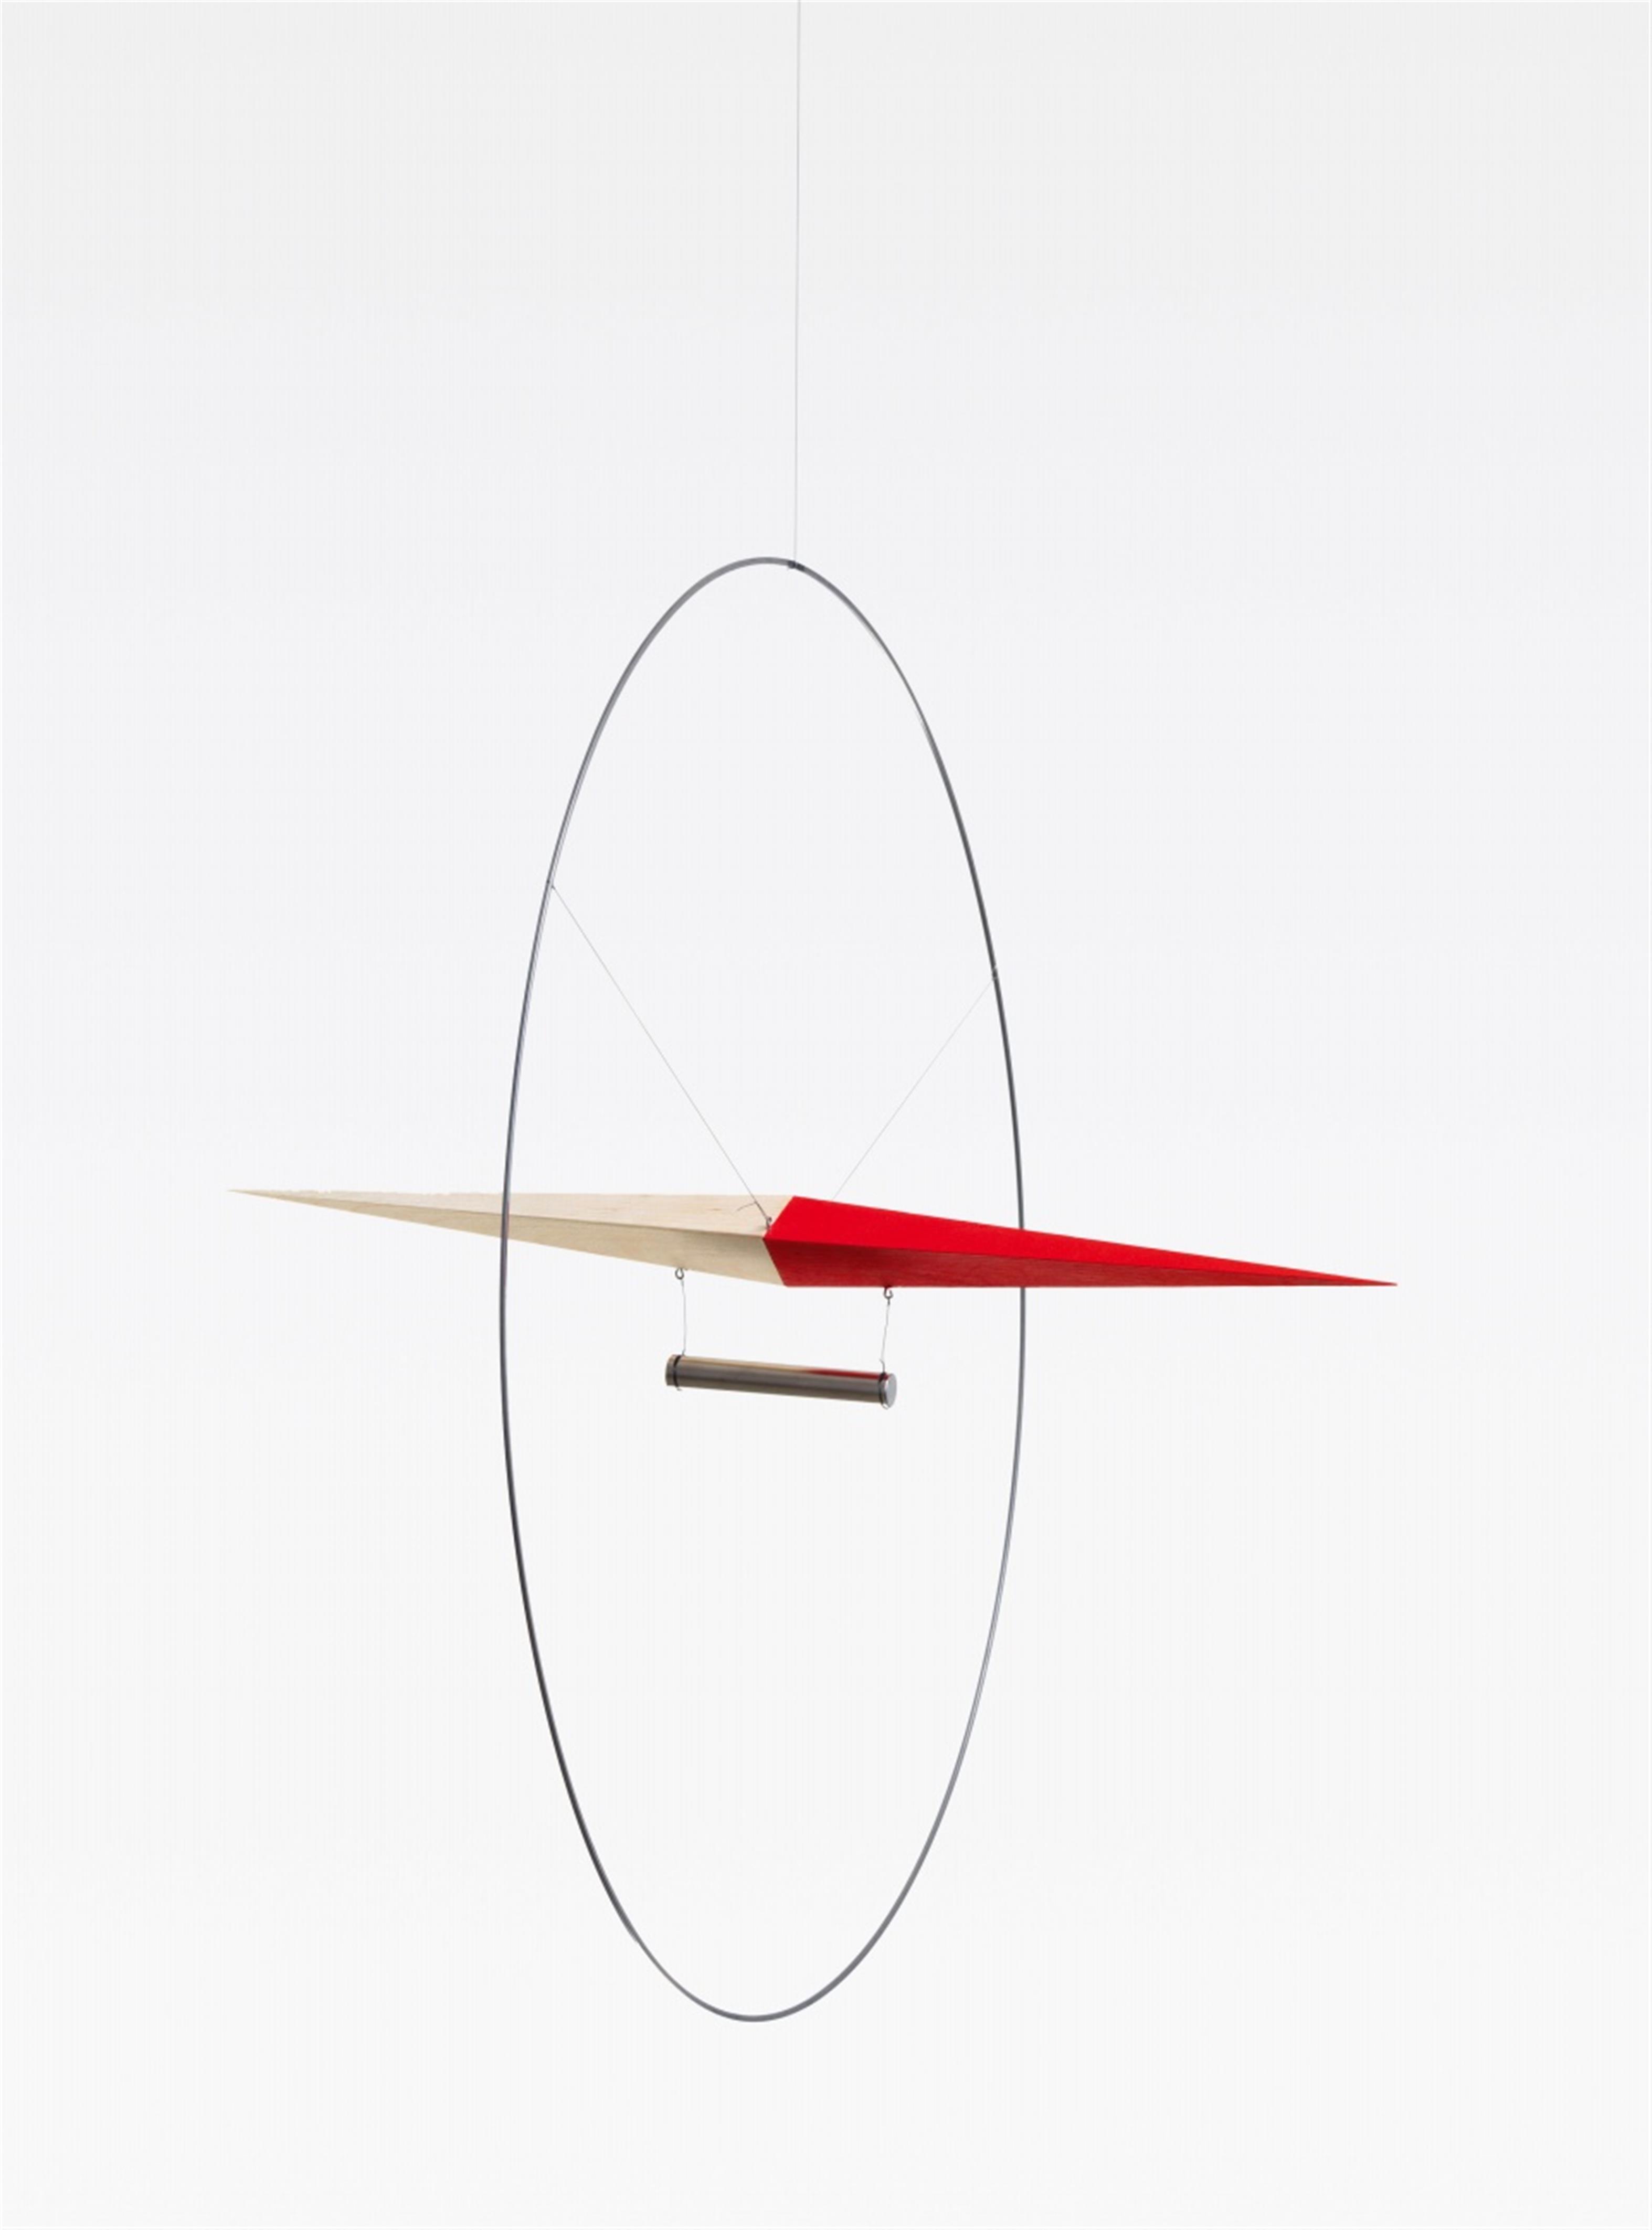 Olafur Eliasson - 360 degree compass - image-1